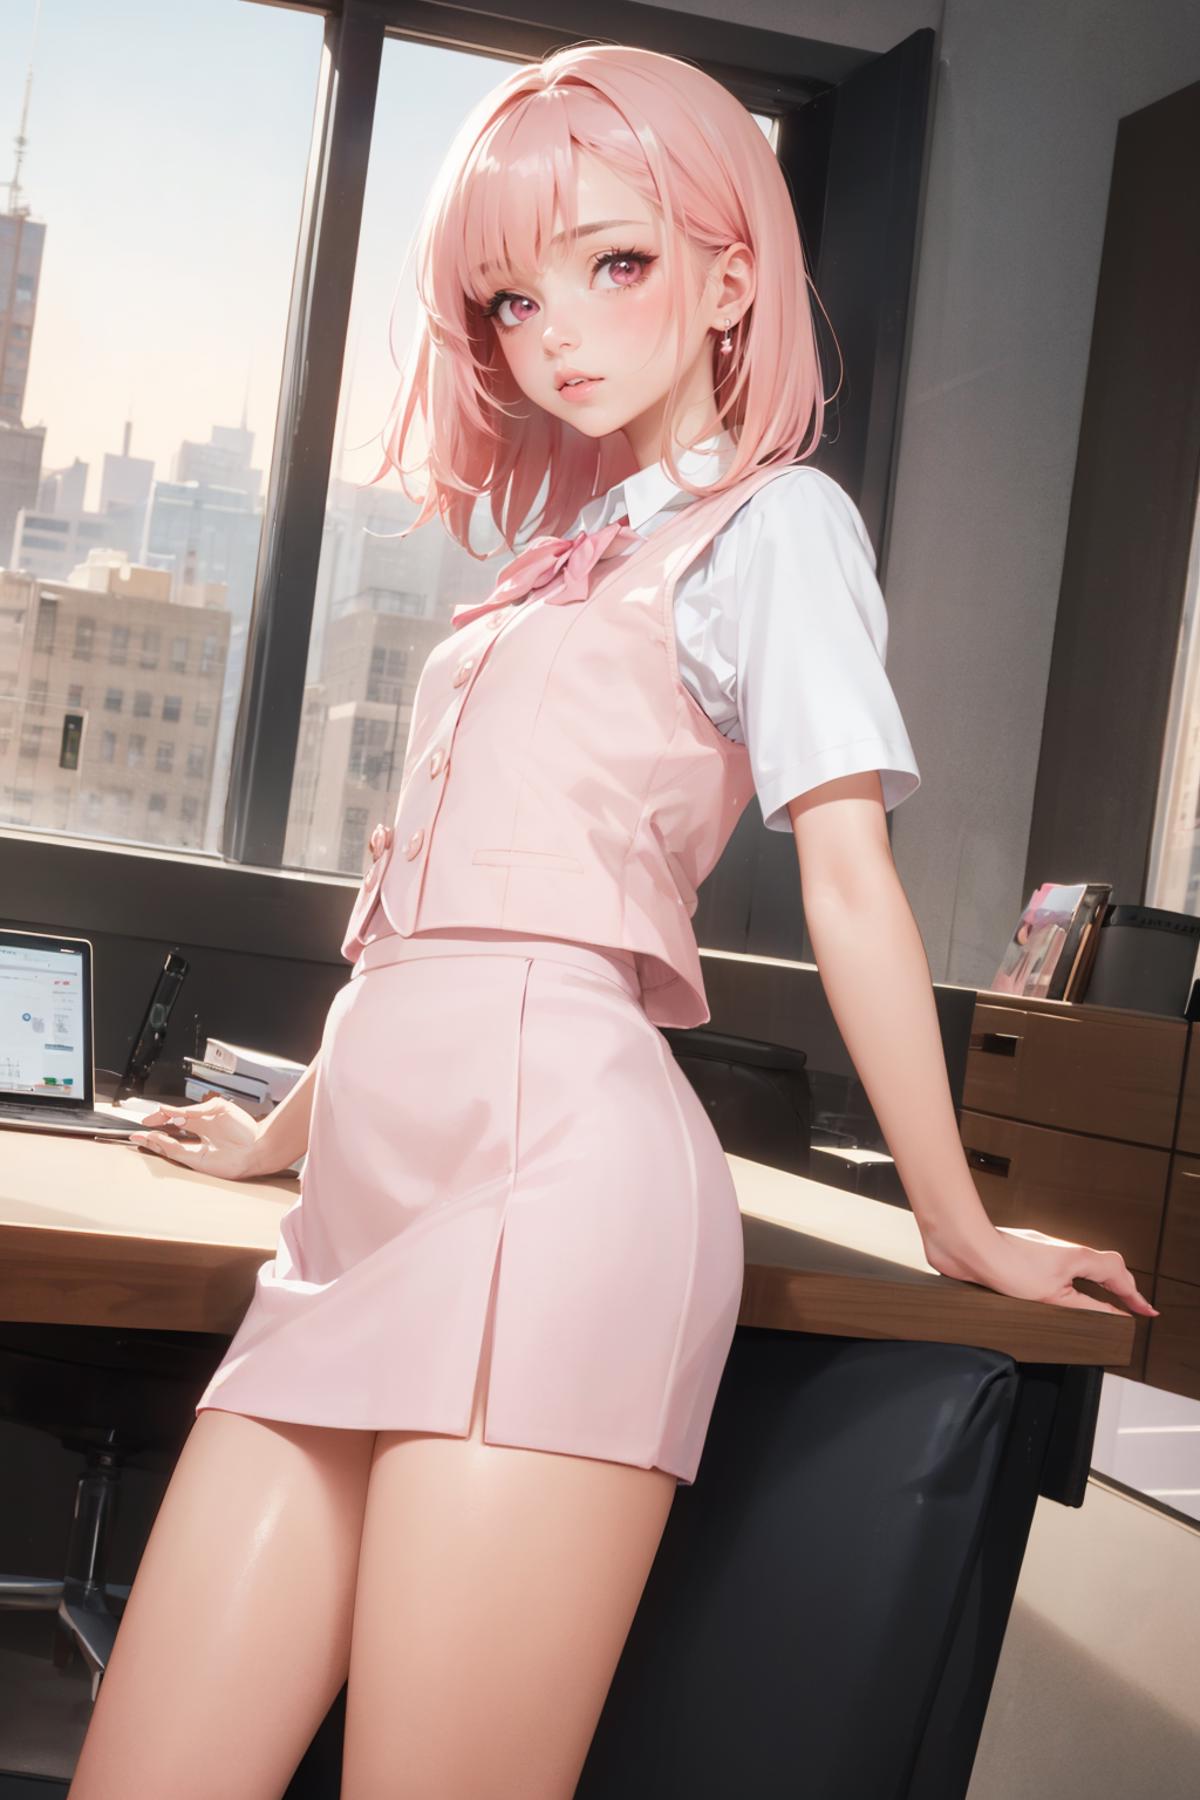 Sexy Office Lady image by Tokugawa